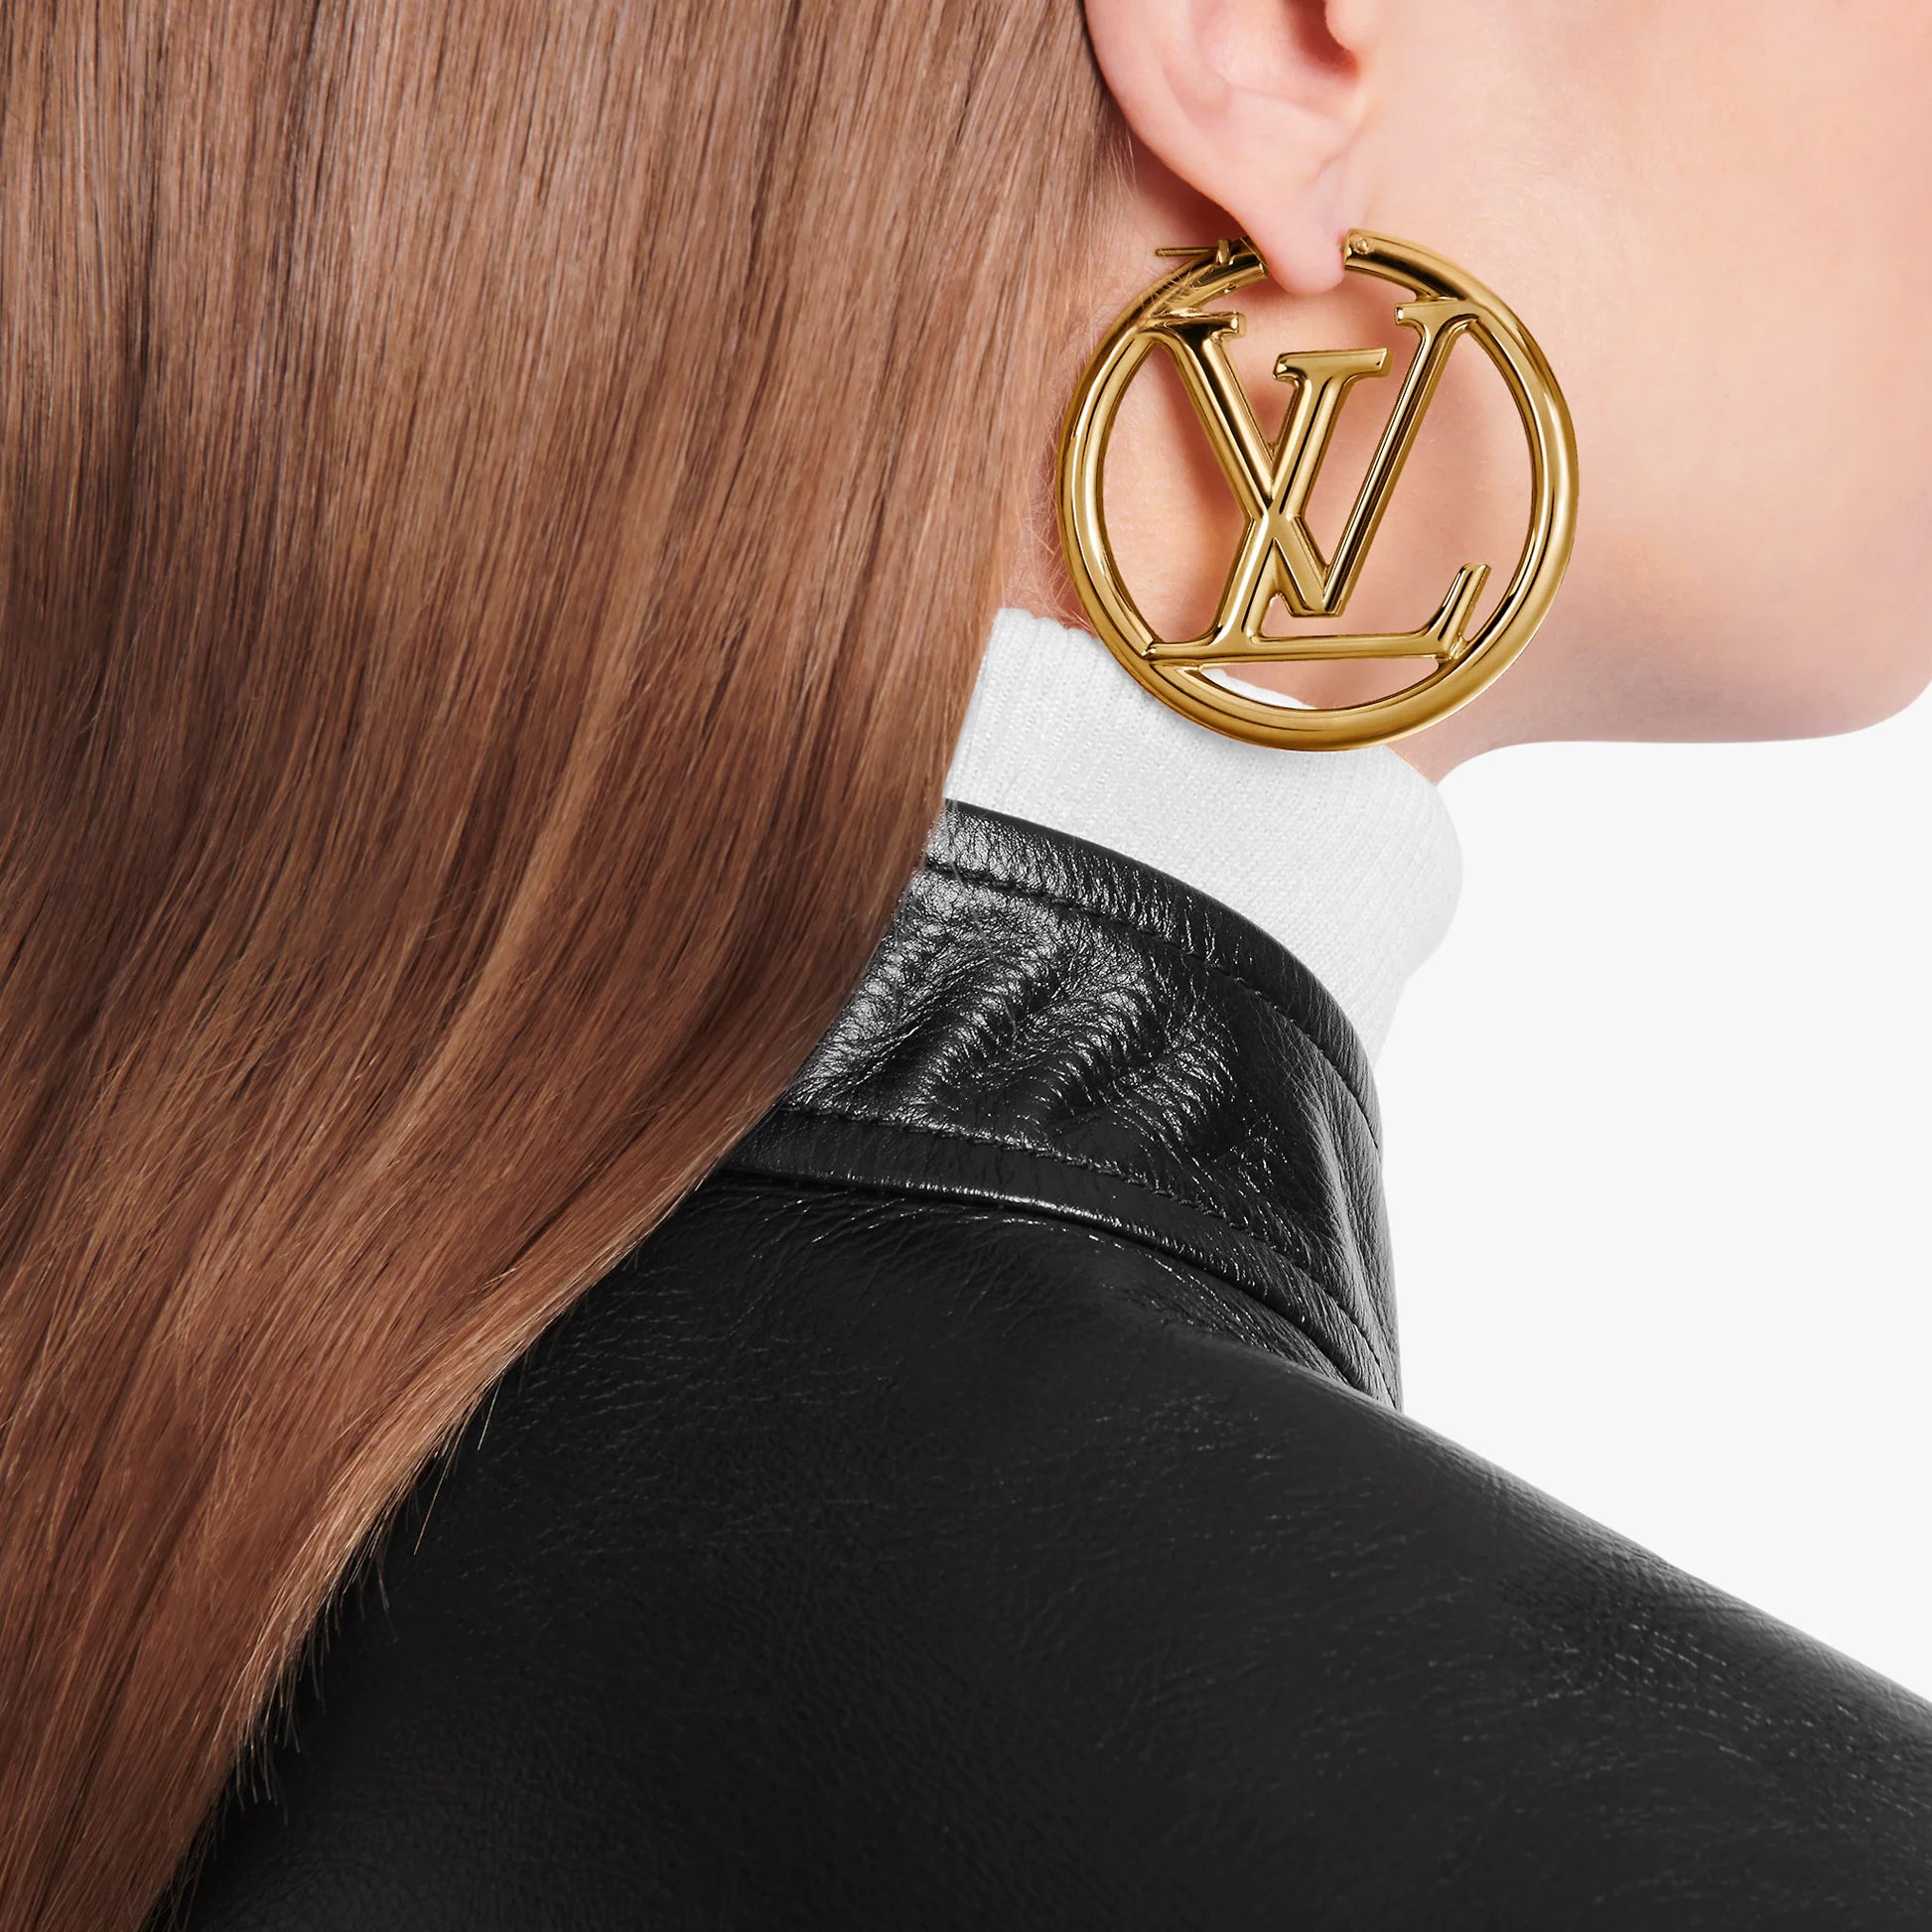 lv circle earrings